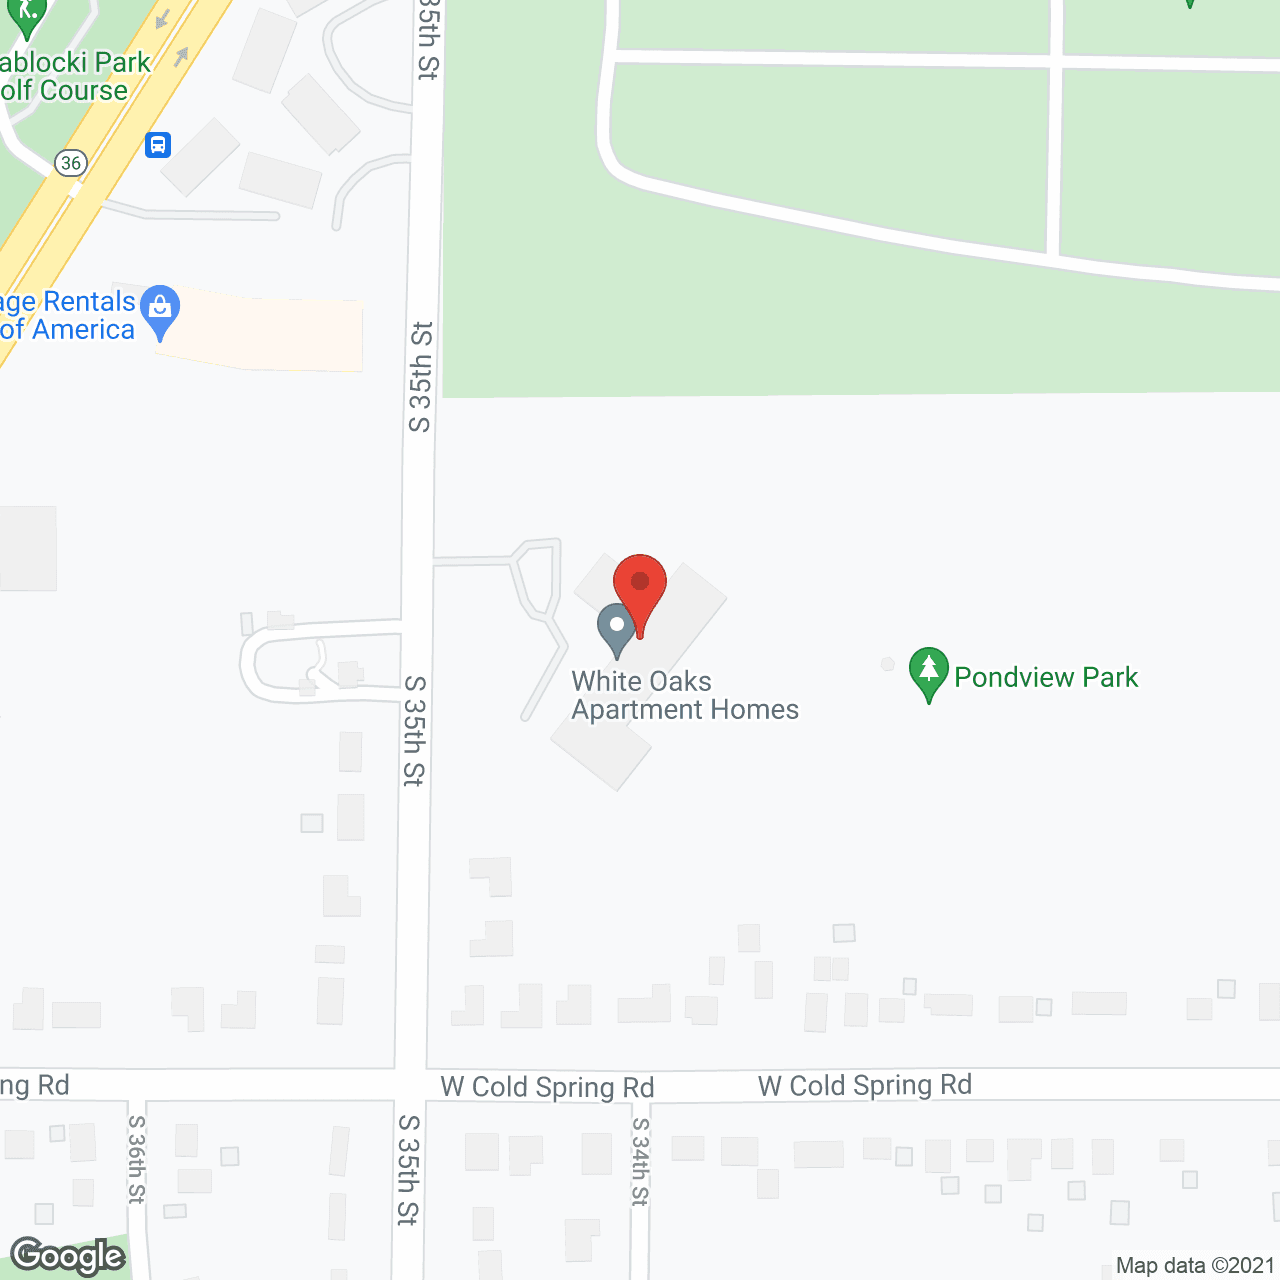 White Oaks in google map